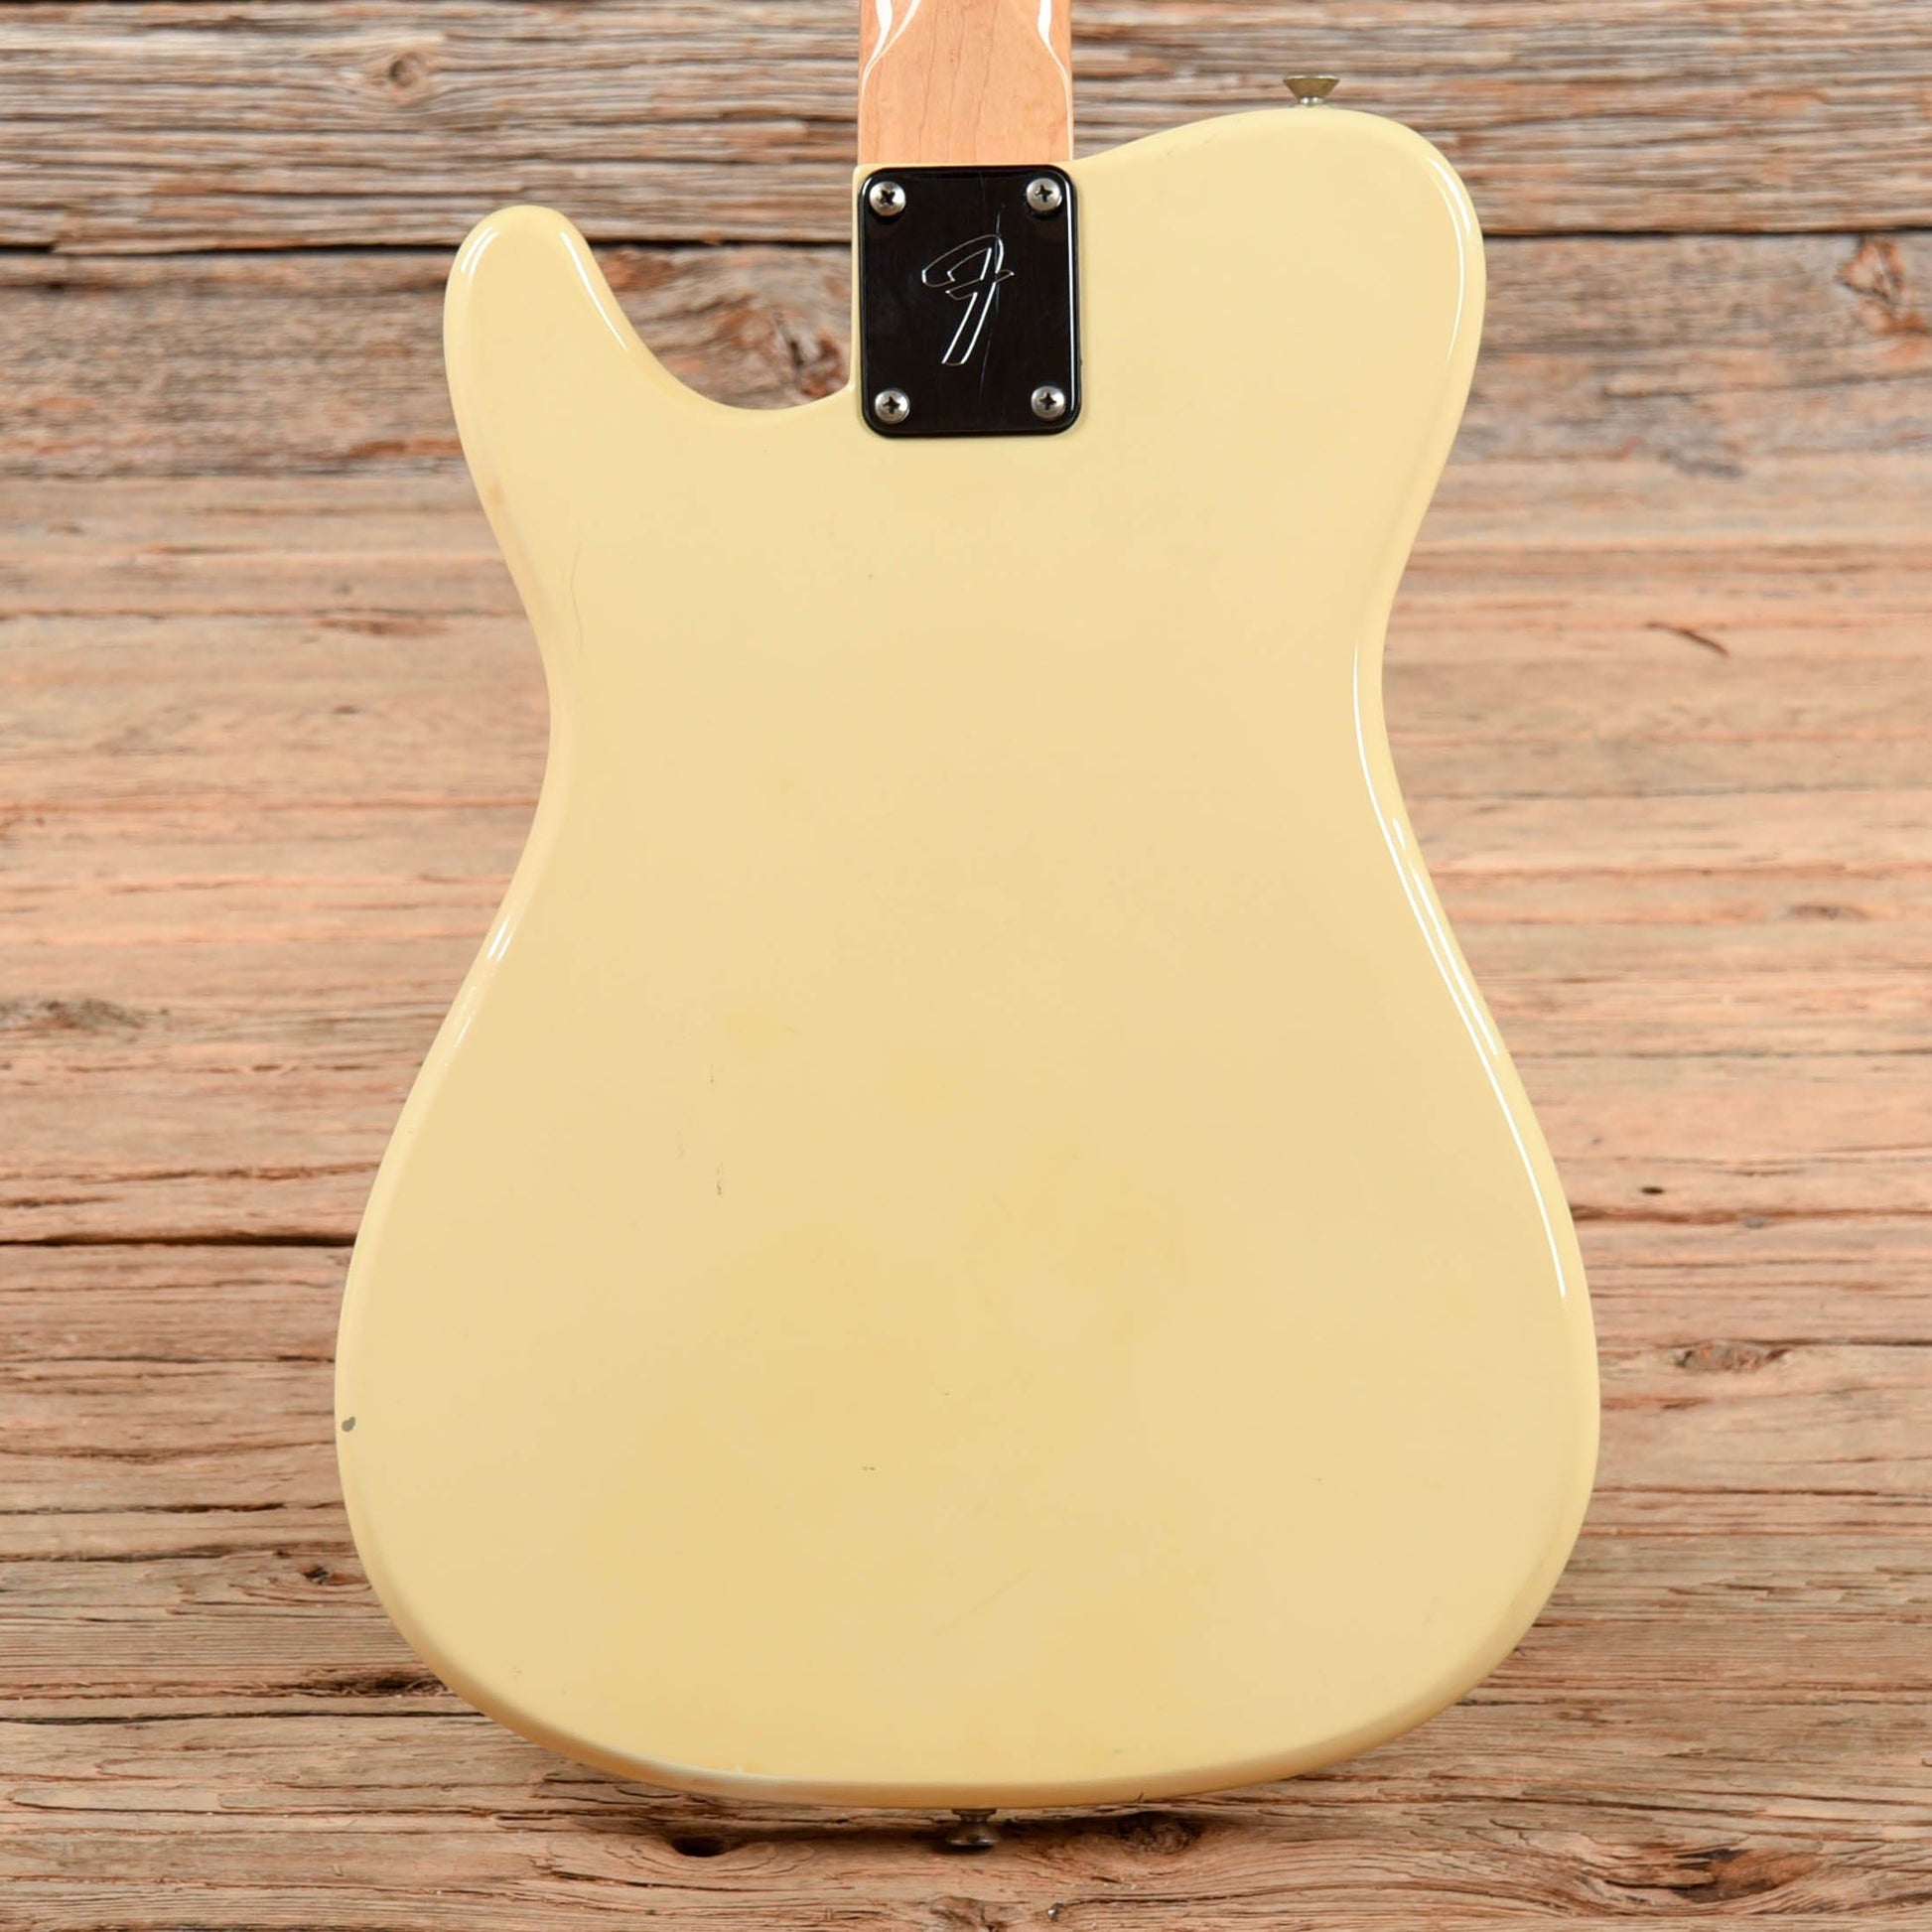 Fender Bullet I Ivory 1981 Electric Guitars / Solid Body